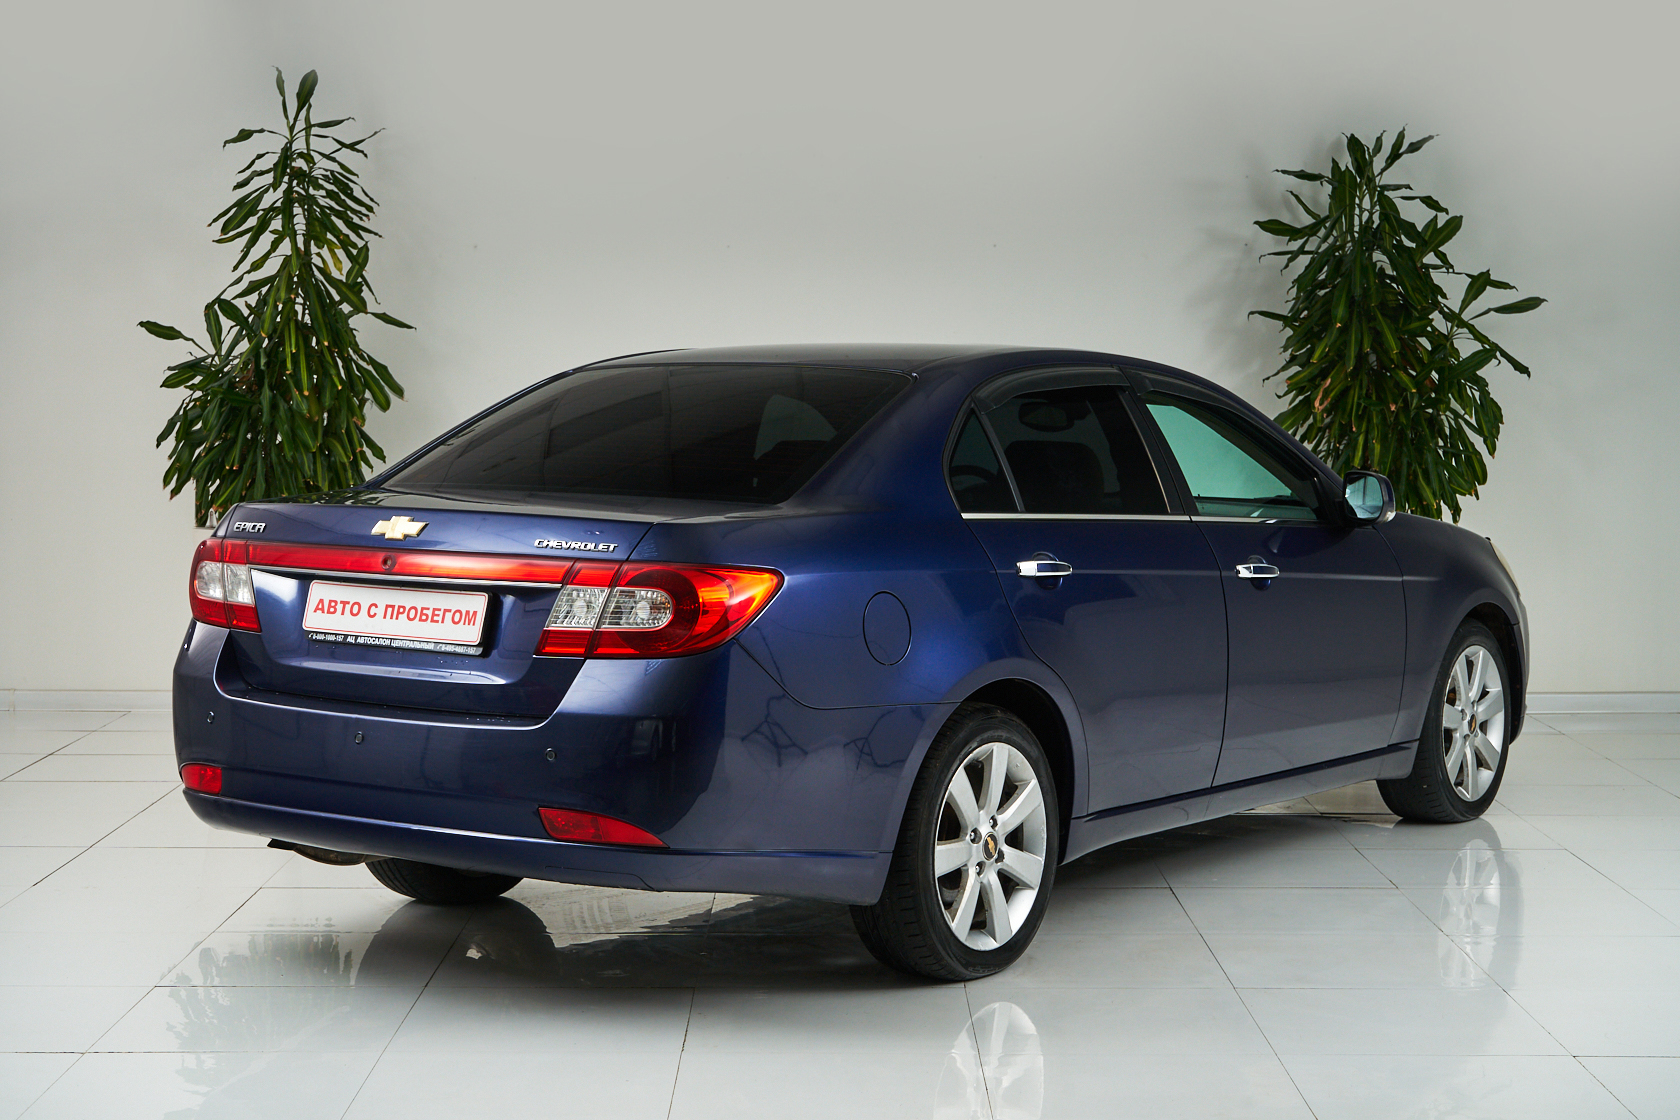 2008 Chevrolet Epica I №5684001, Синий, 227059 рублей - вид 5